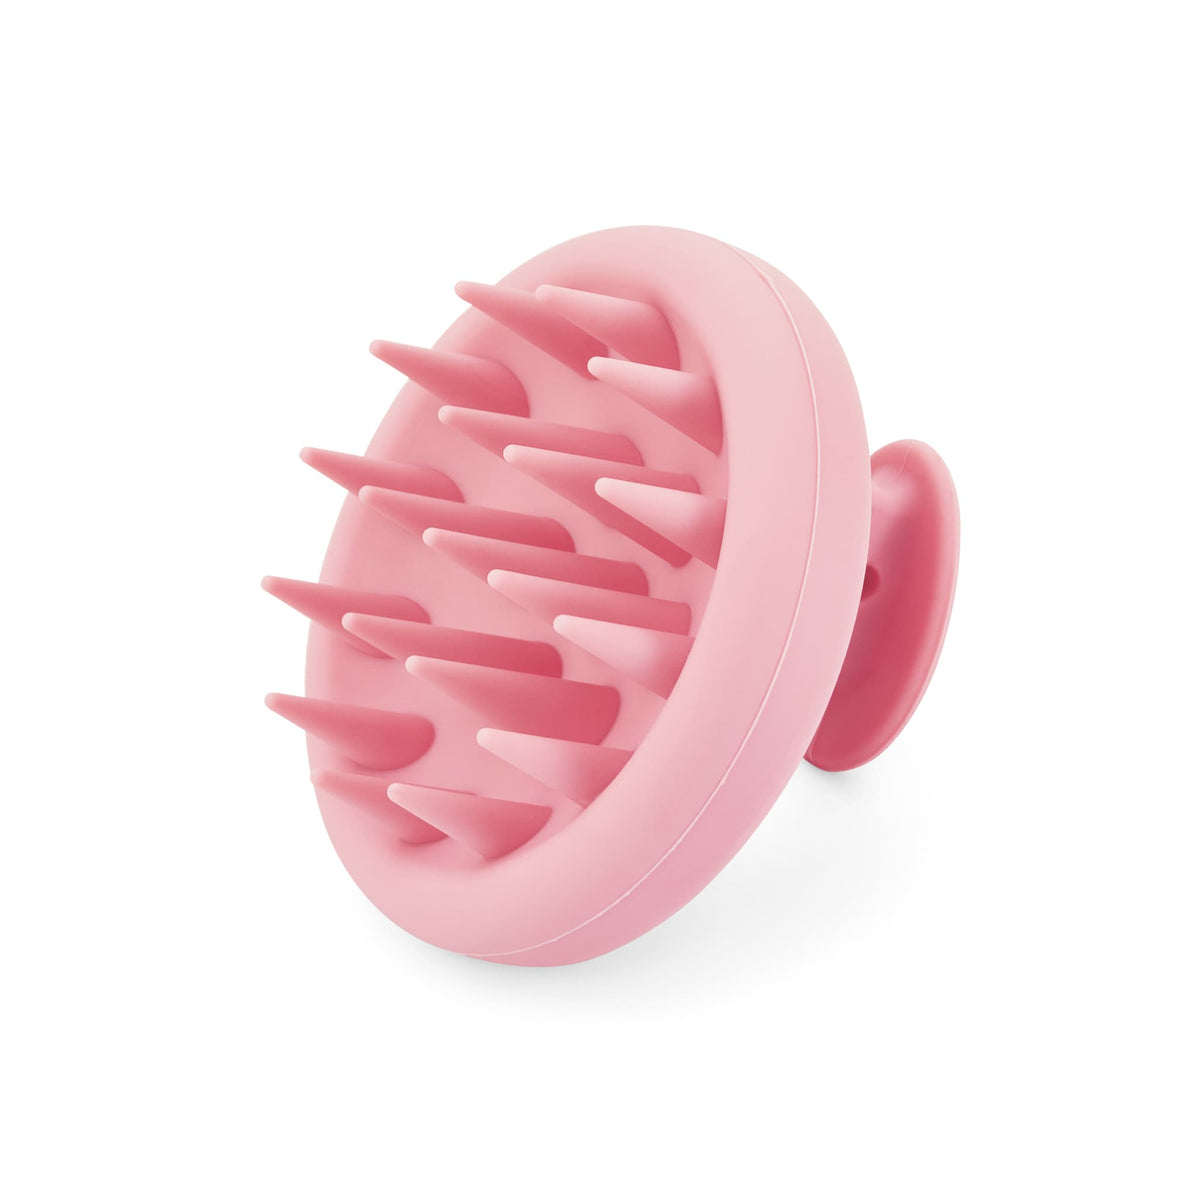 Only Curls Scalp Massager - Pink - Only Curls